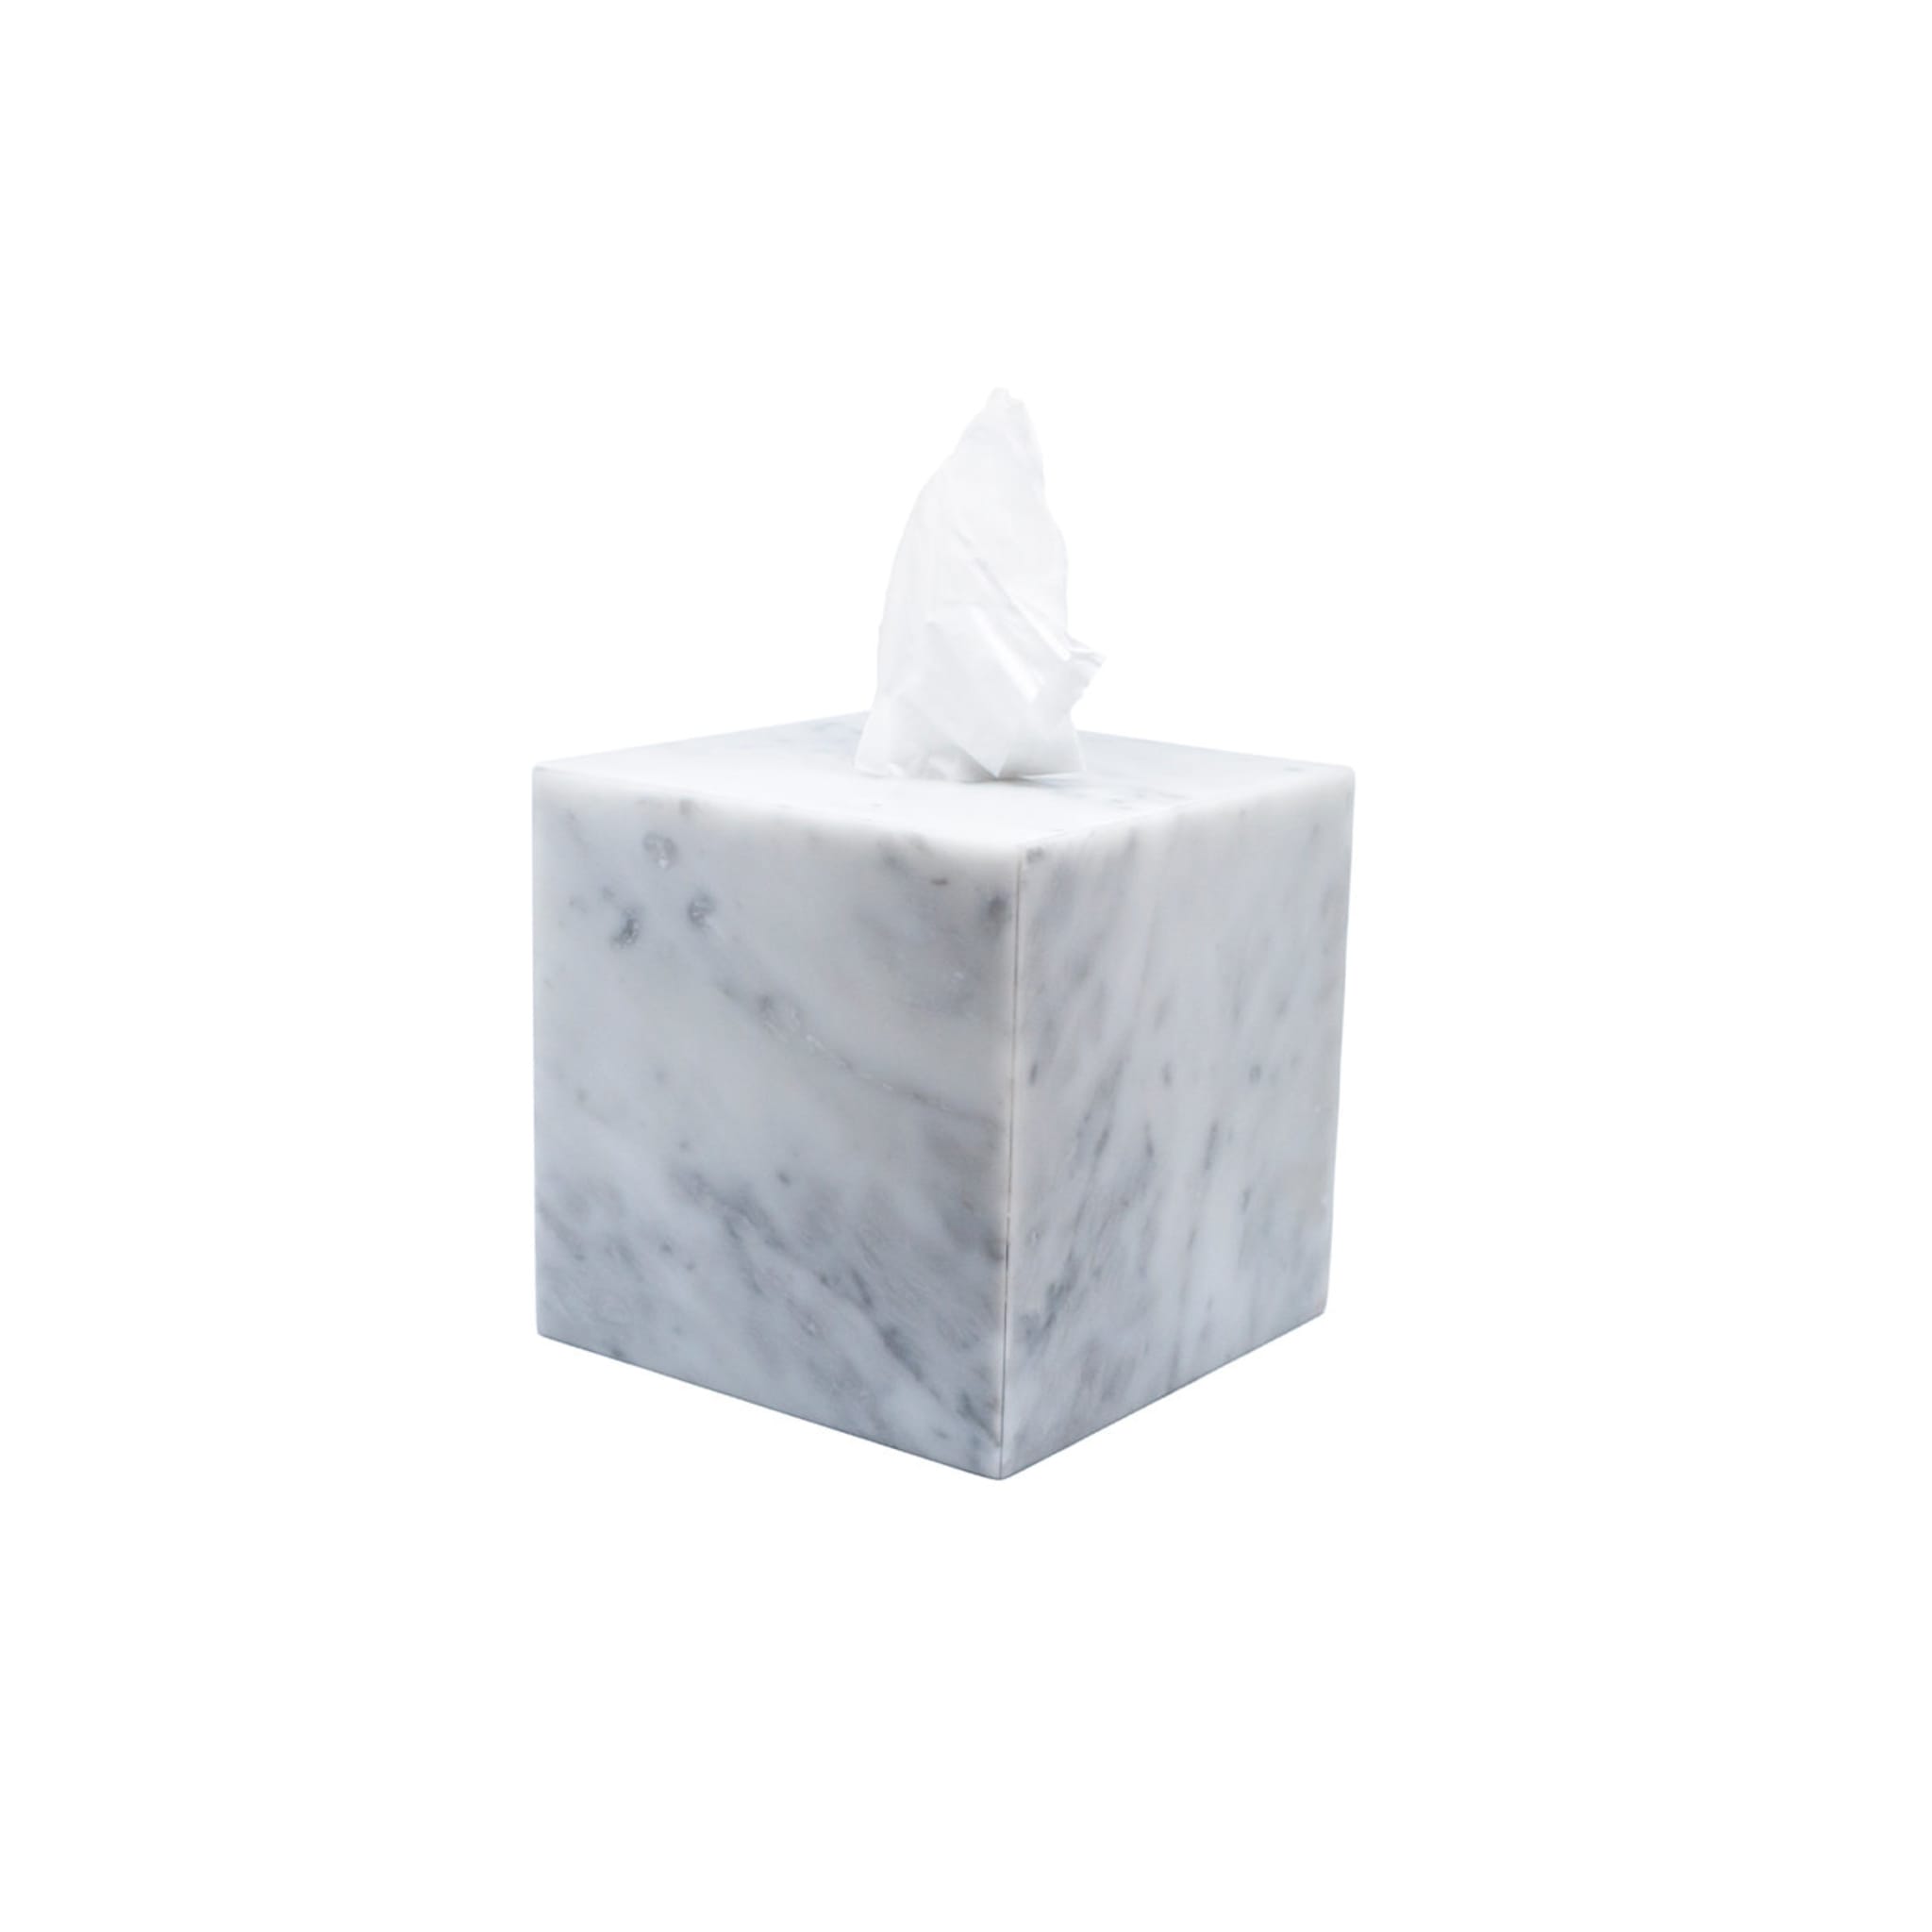 White Carrara Marble Tissue Box - Alternative view 2